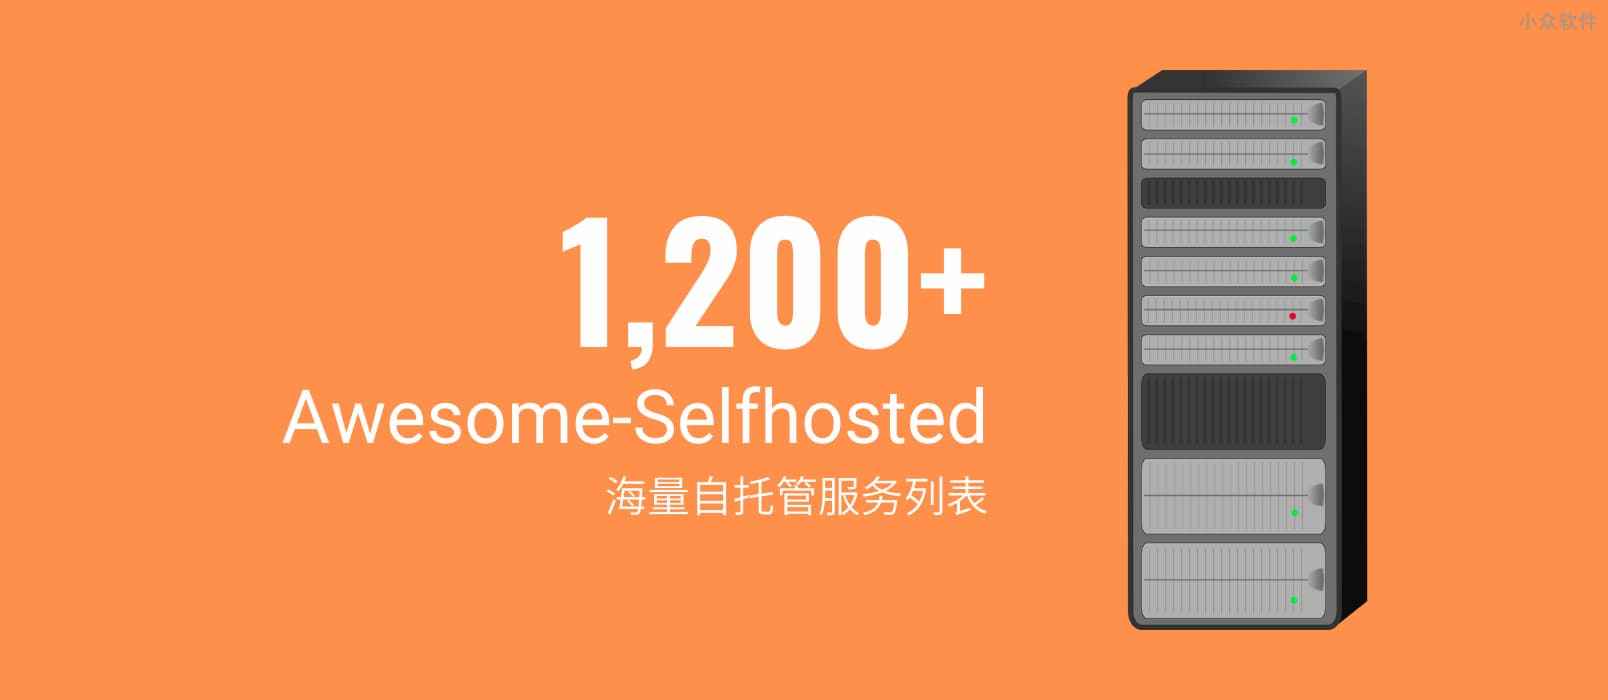 Awesome-Selfhosted – 超过 1200 个，海量「自托管服务」项目列表